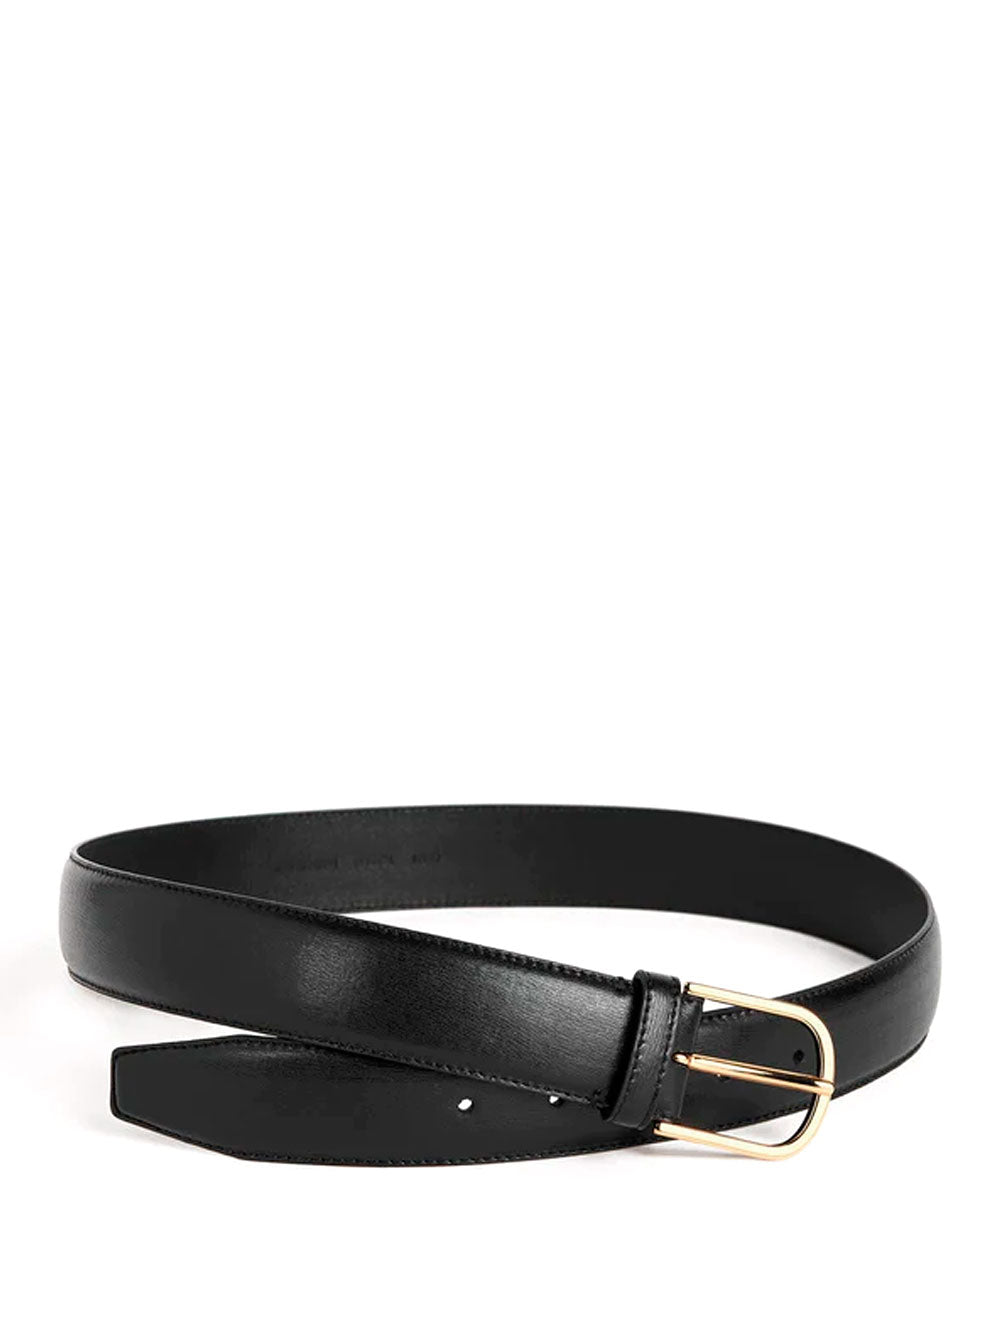 Minimal belt